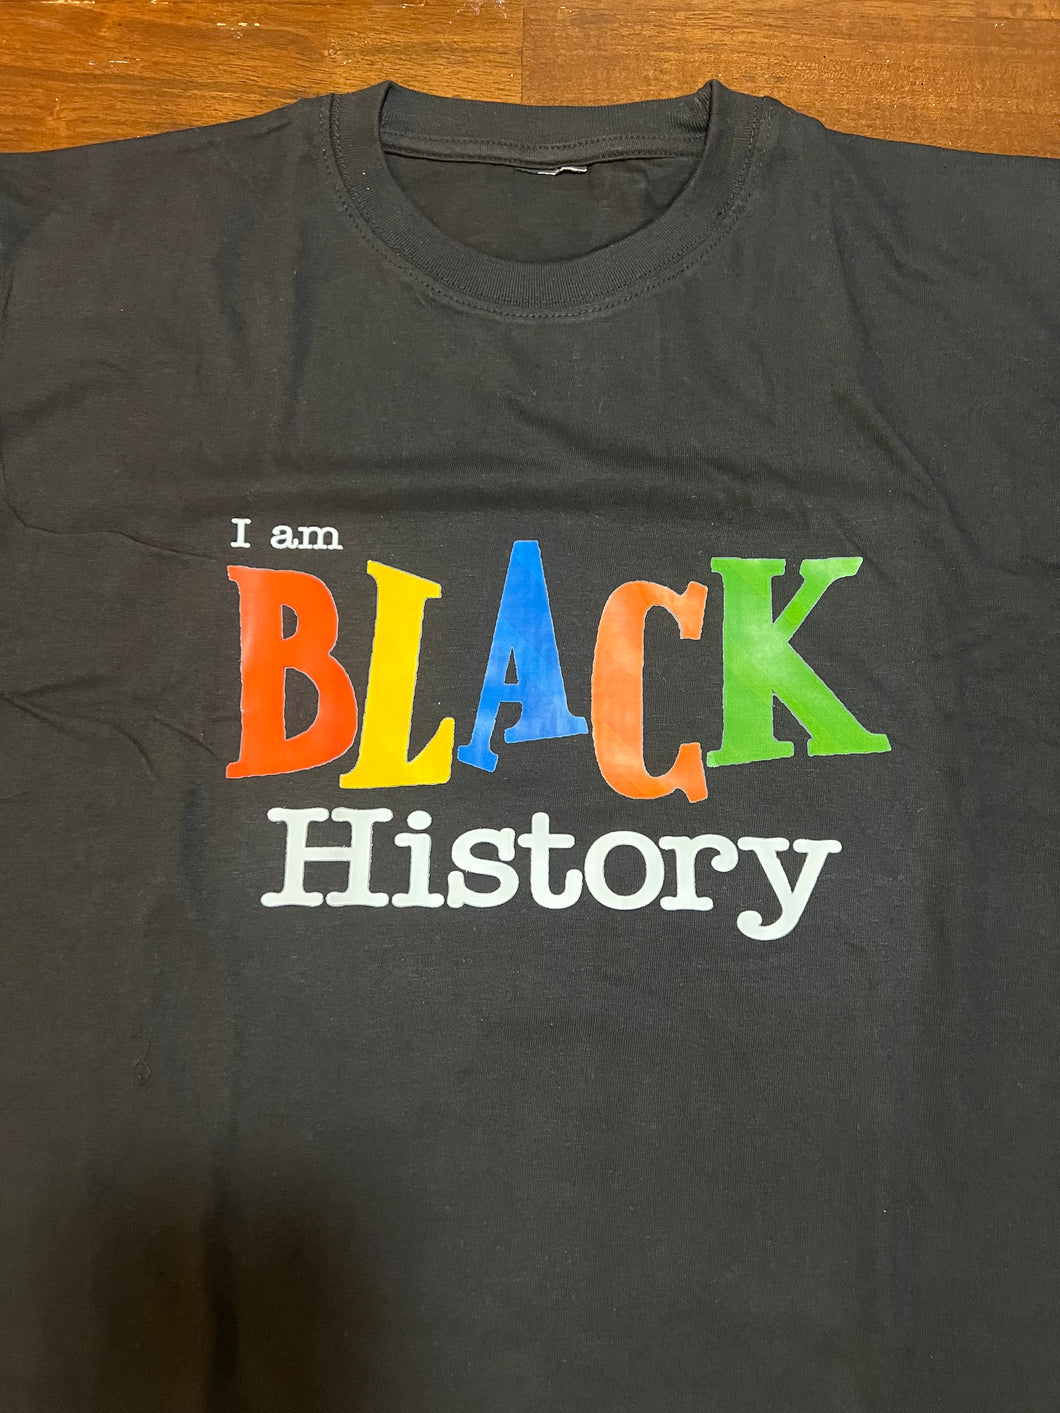 I’m Black History